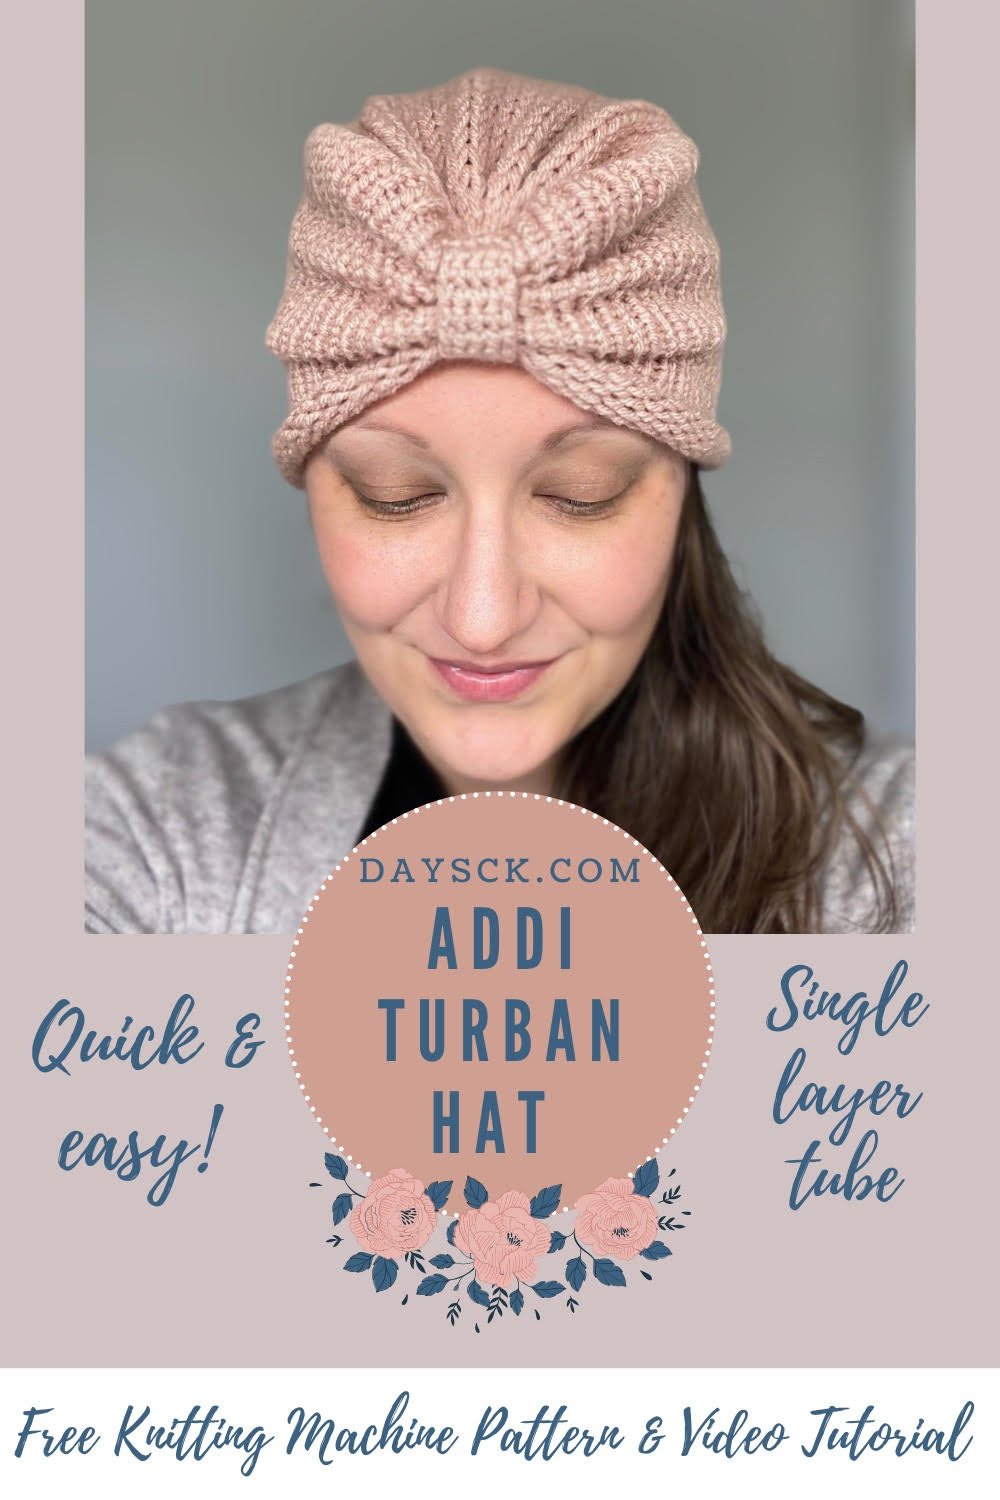 DIY Beginner Tutorial: How To Make a Brimmed Hat on Addi Express